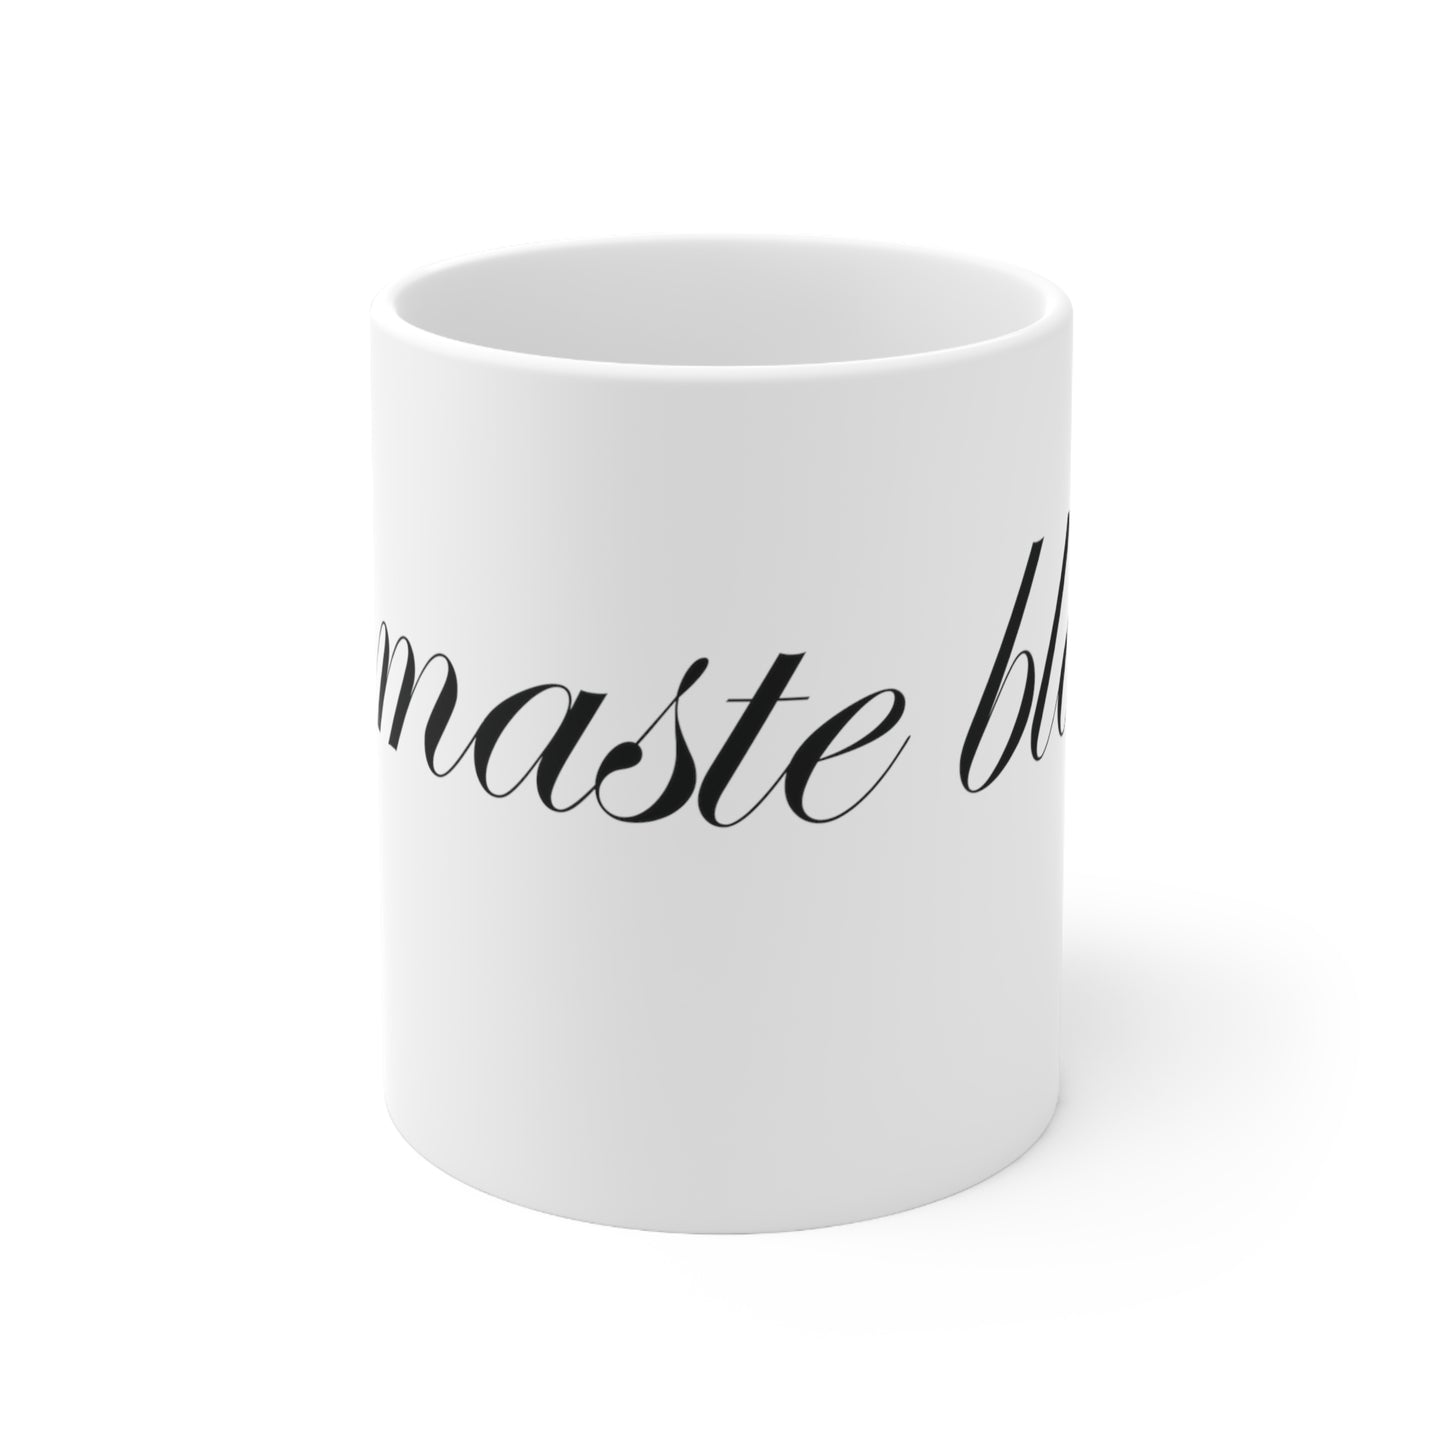 Namaste Black Coffee Mug 11oz